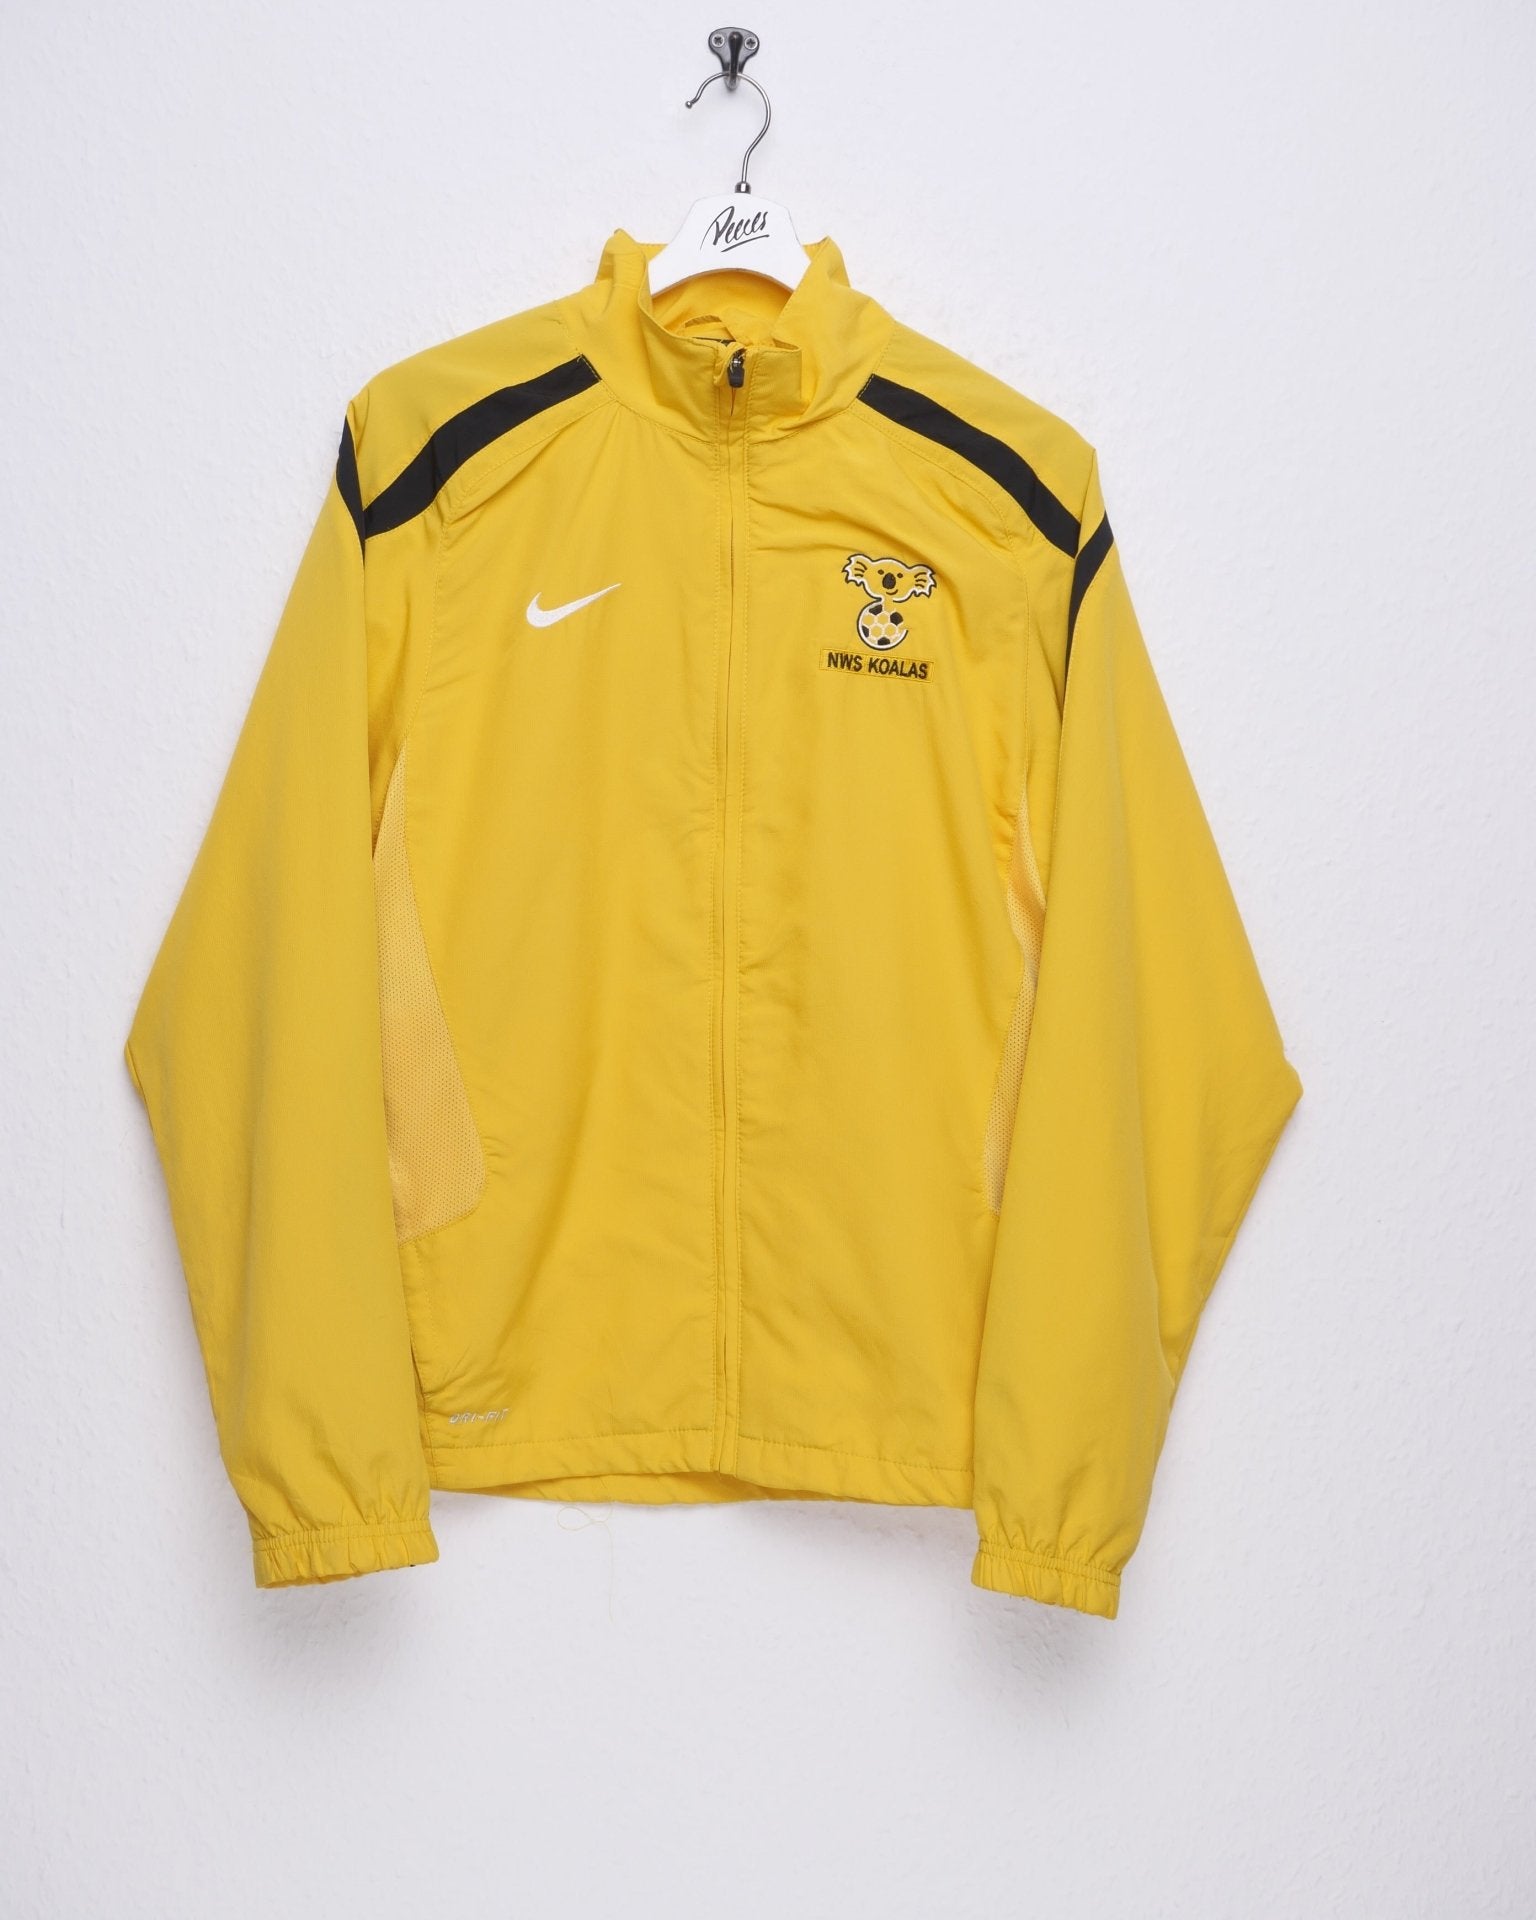 Nike NWS Koalas embroidered Logo yellow Track Jacke - Peeces